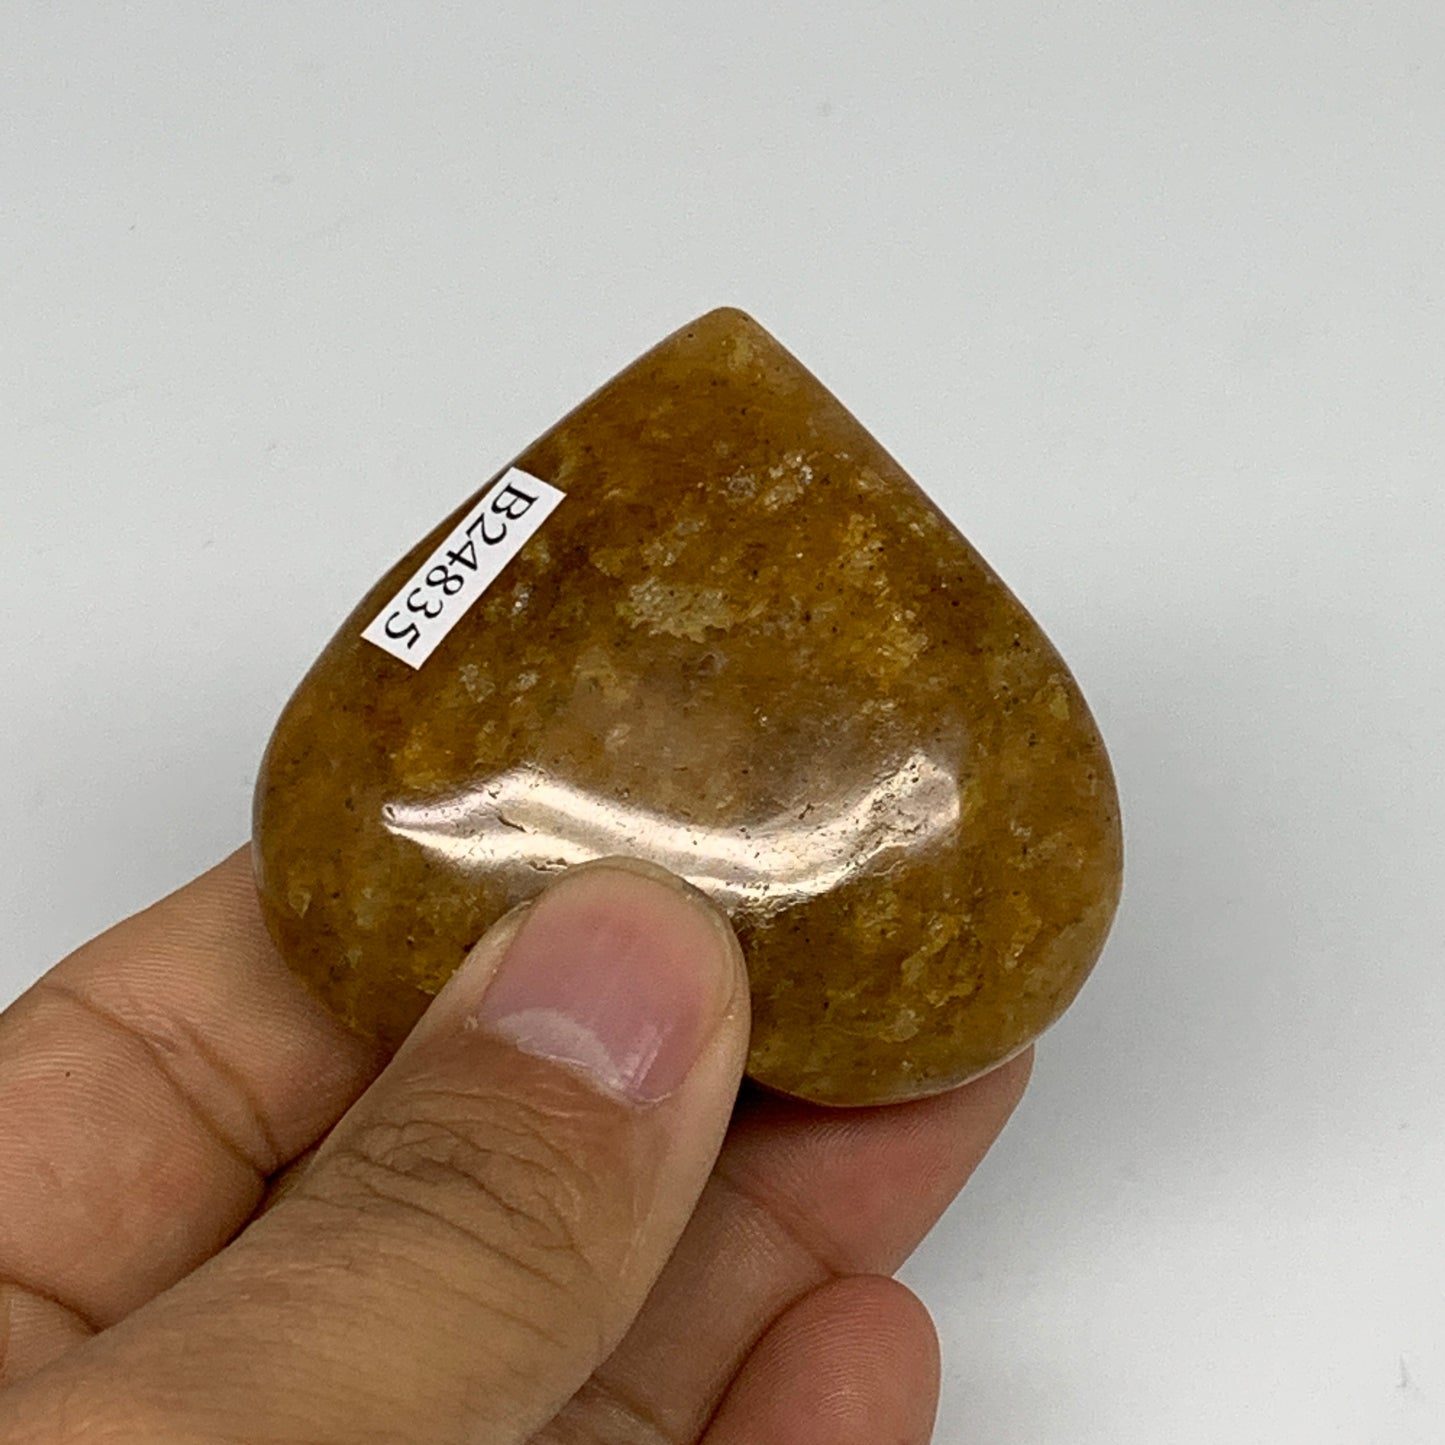 87.6g, 2"x2.2"x0.9", Natural Golden Quartz Heart Small Polished Crystal, B24835